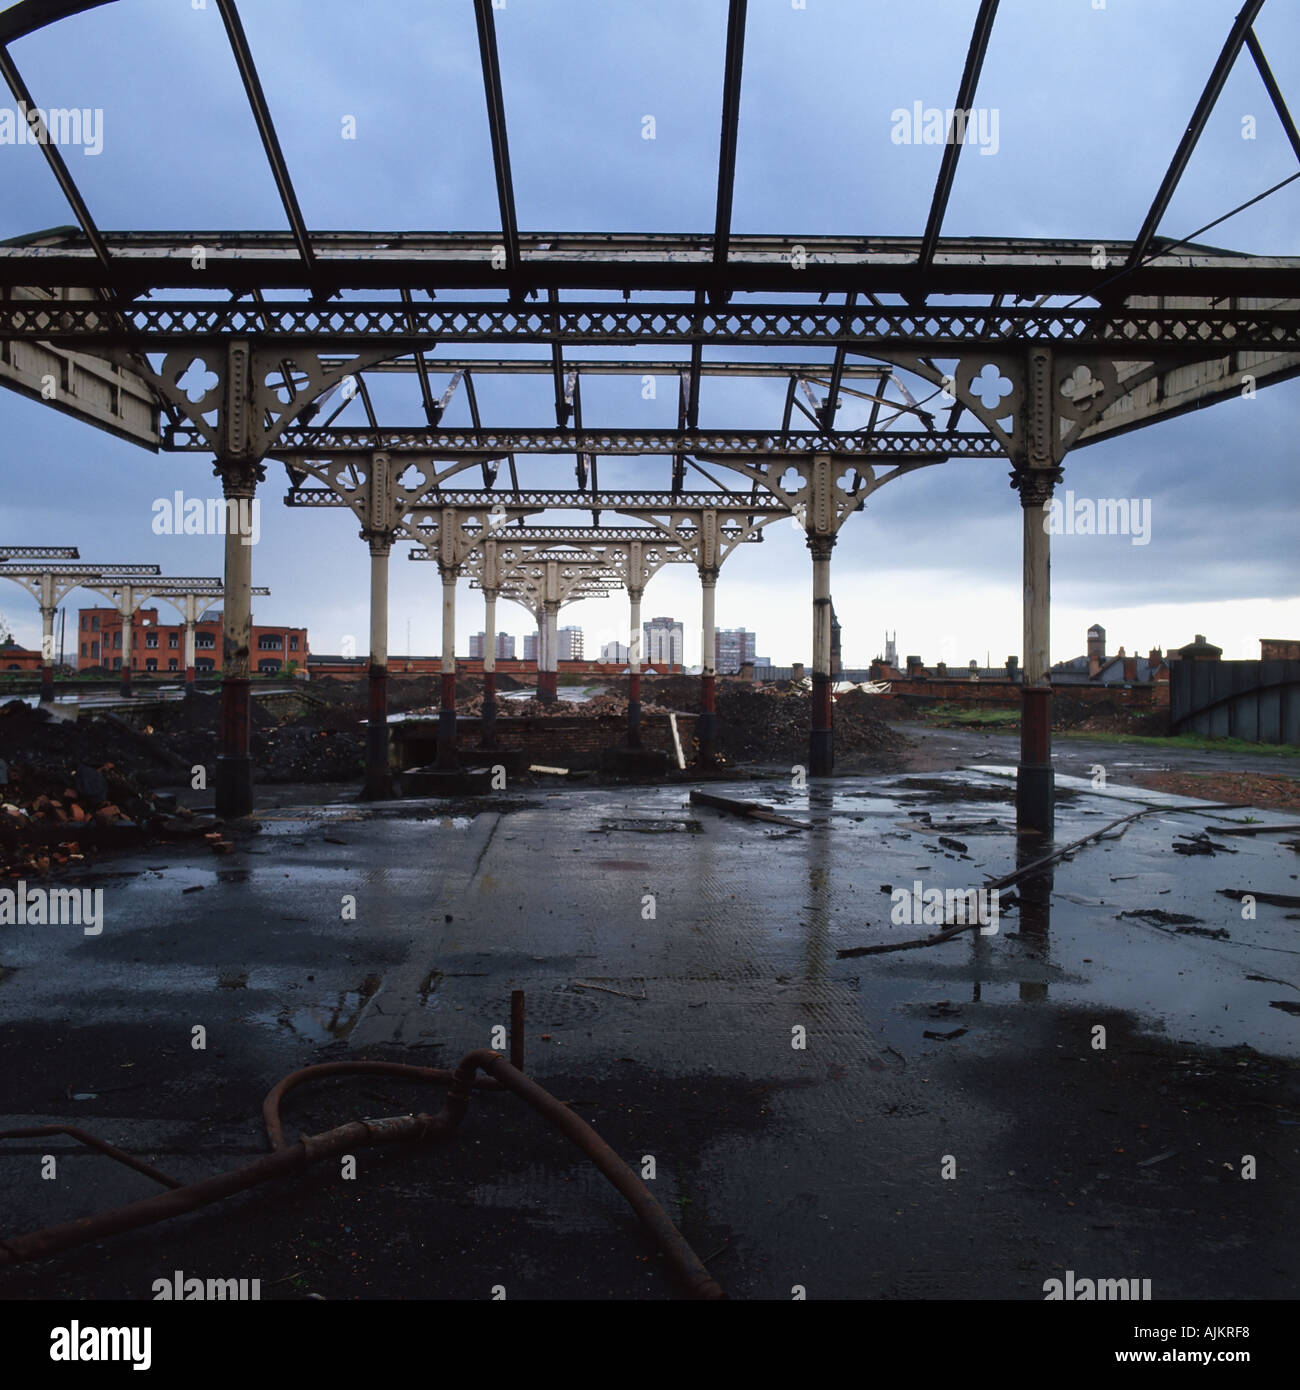 A derelict railway station Stock Photo